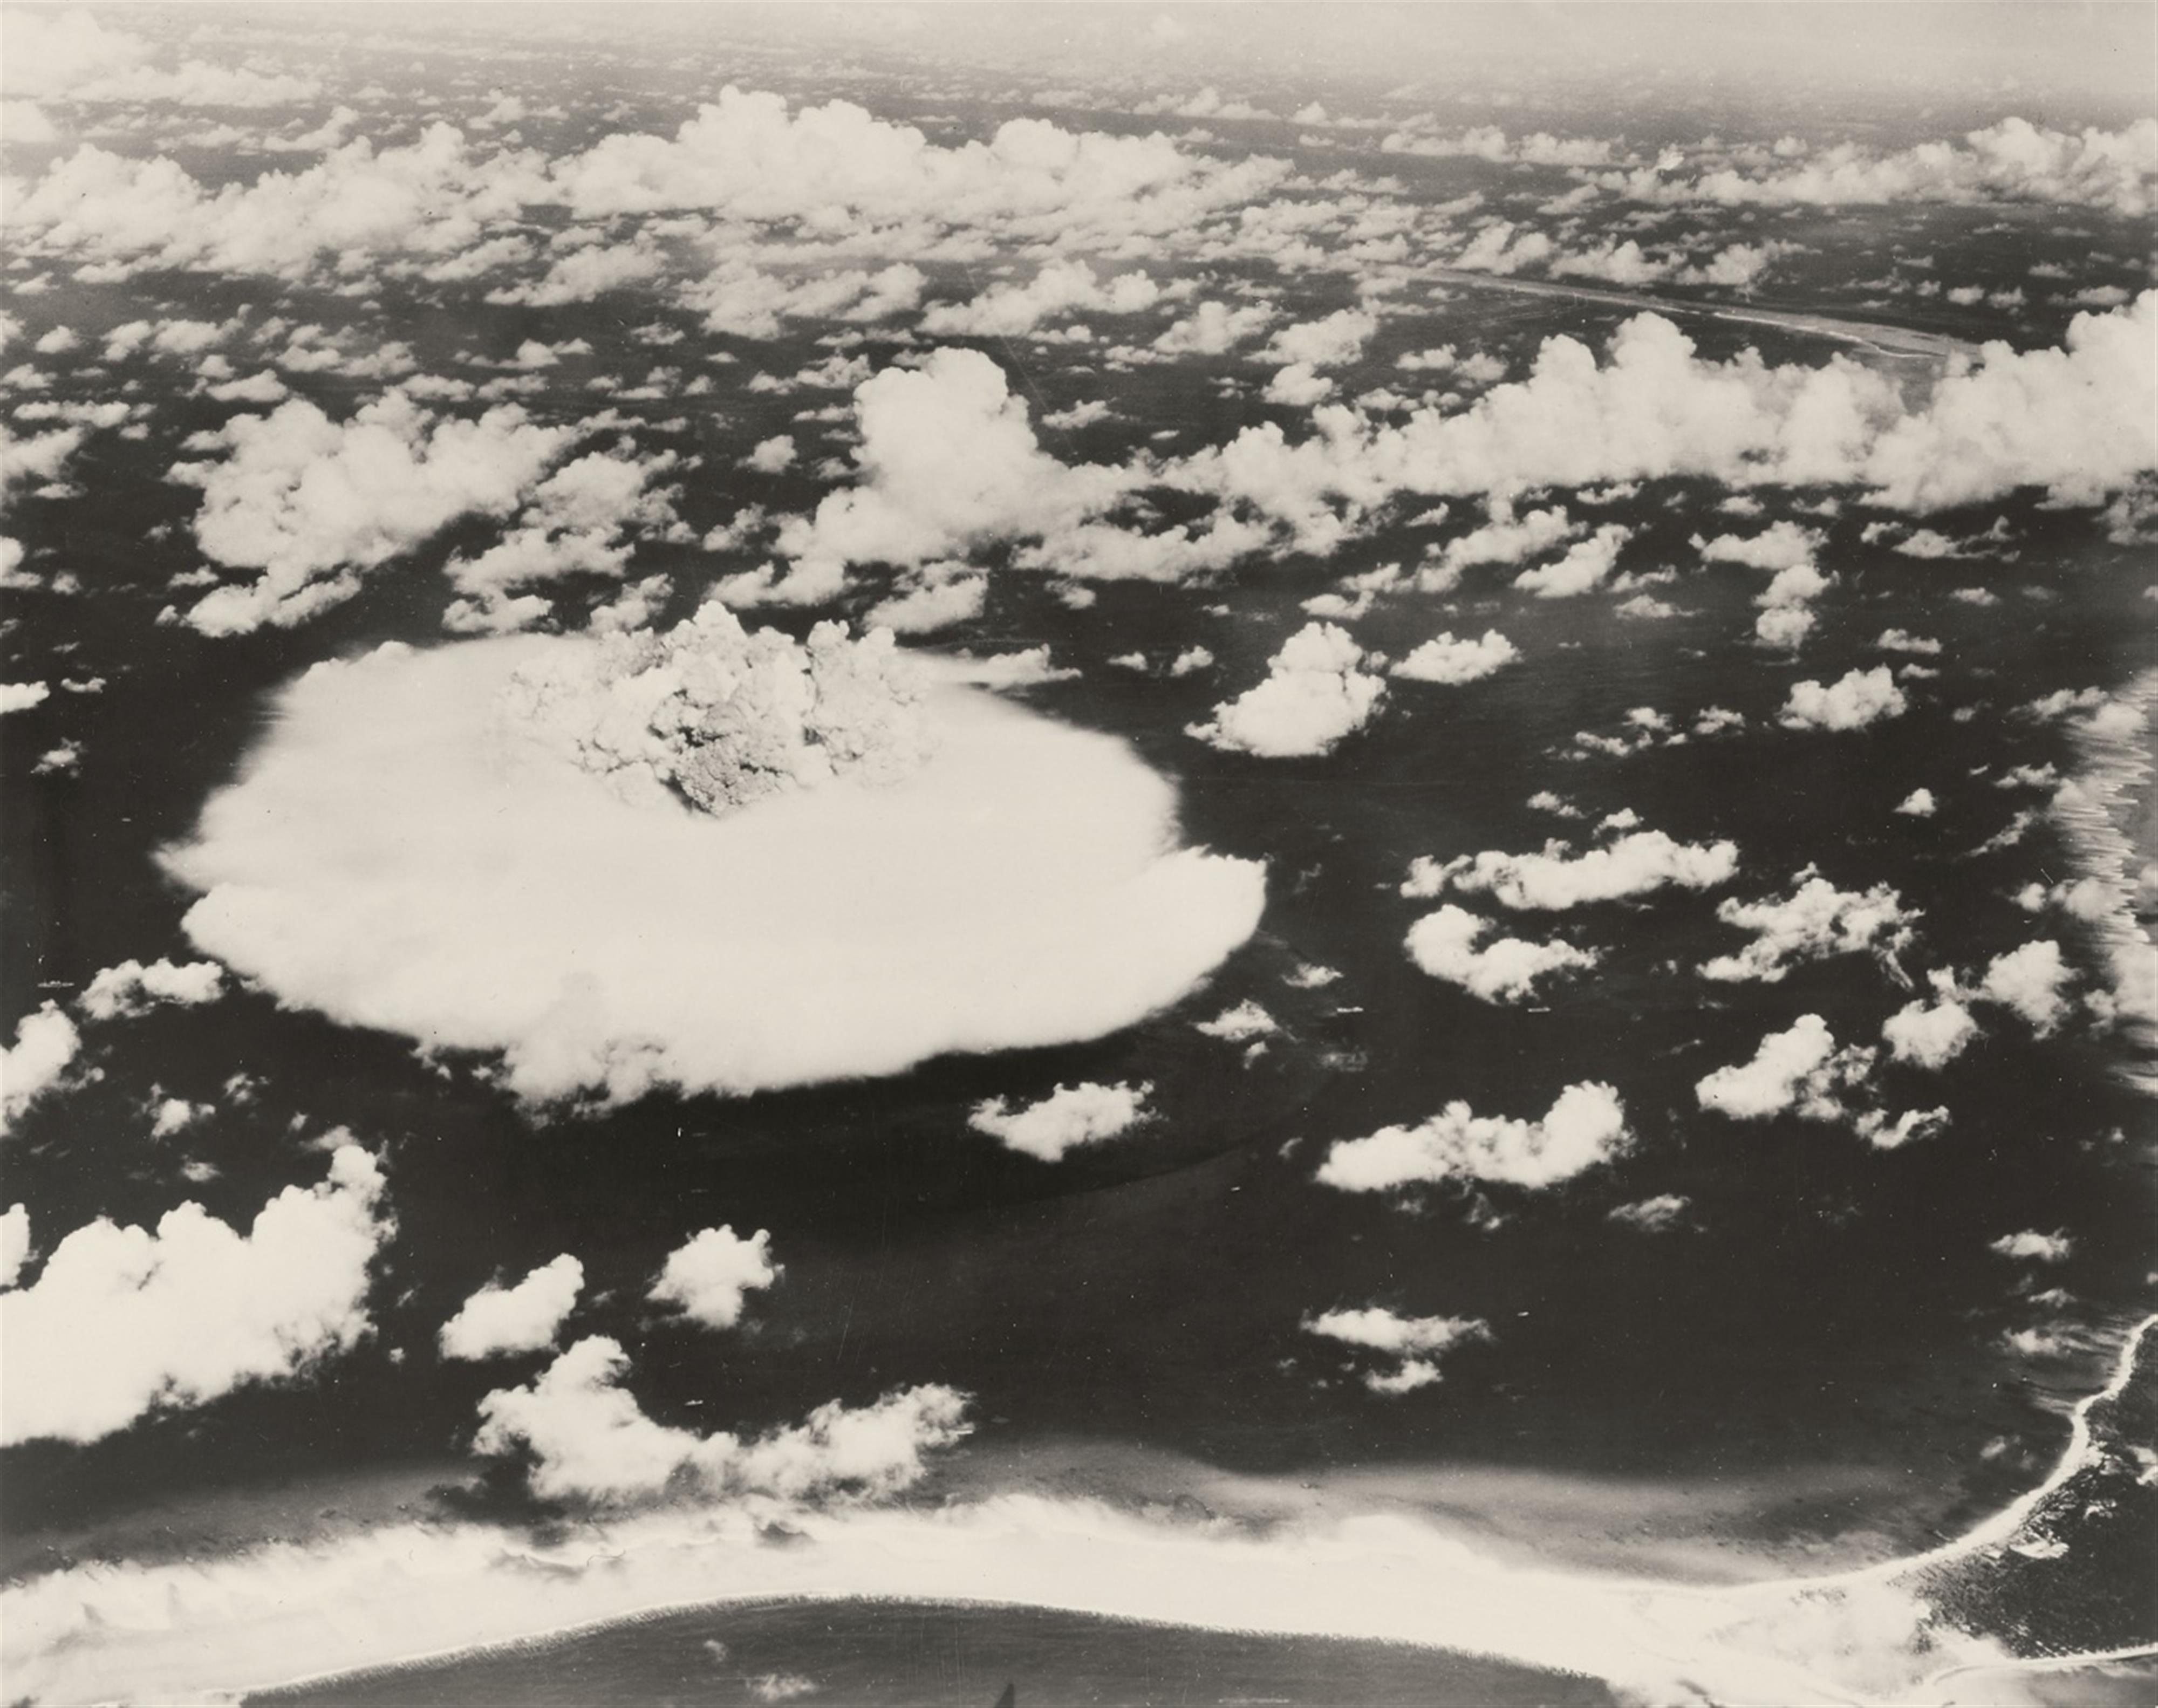 Joint Army Task Force One Photo - "Operation Crossroads" - Aufnahmen der Atombomben-Tests auf dem Bikini-Atoll - image-20